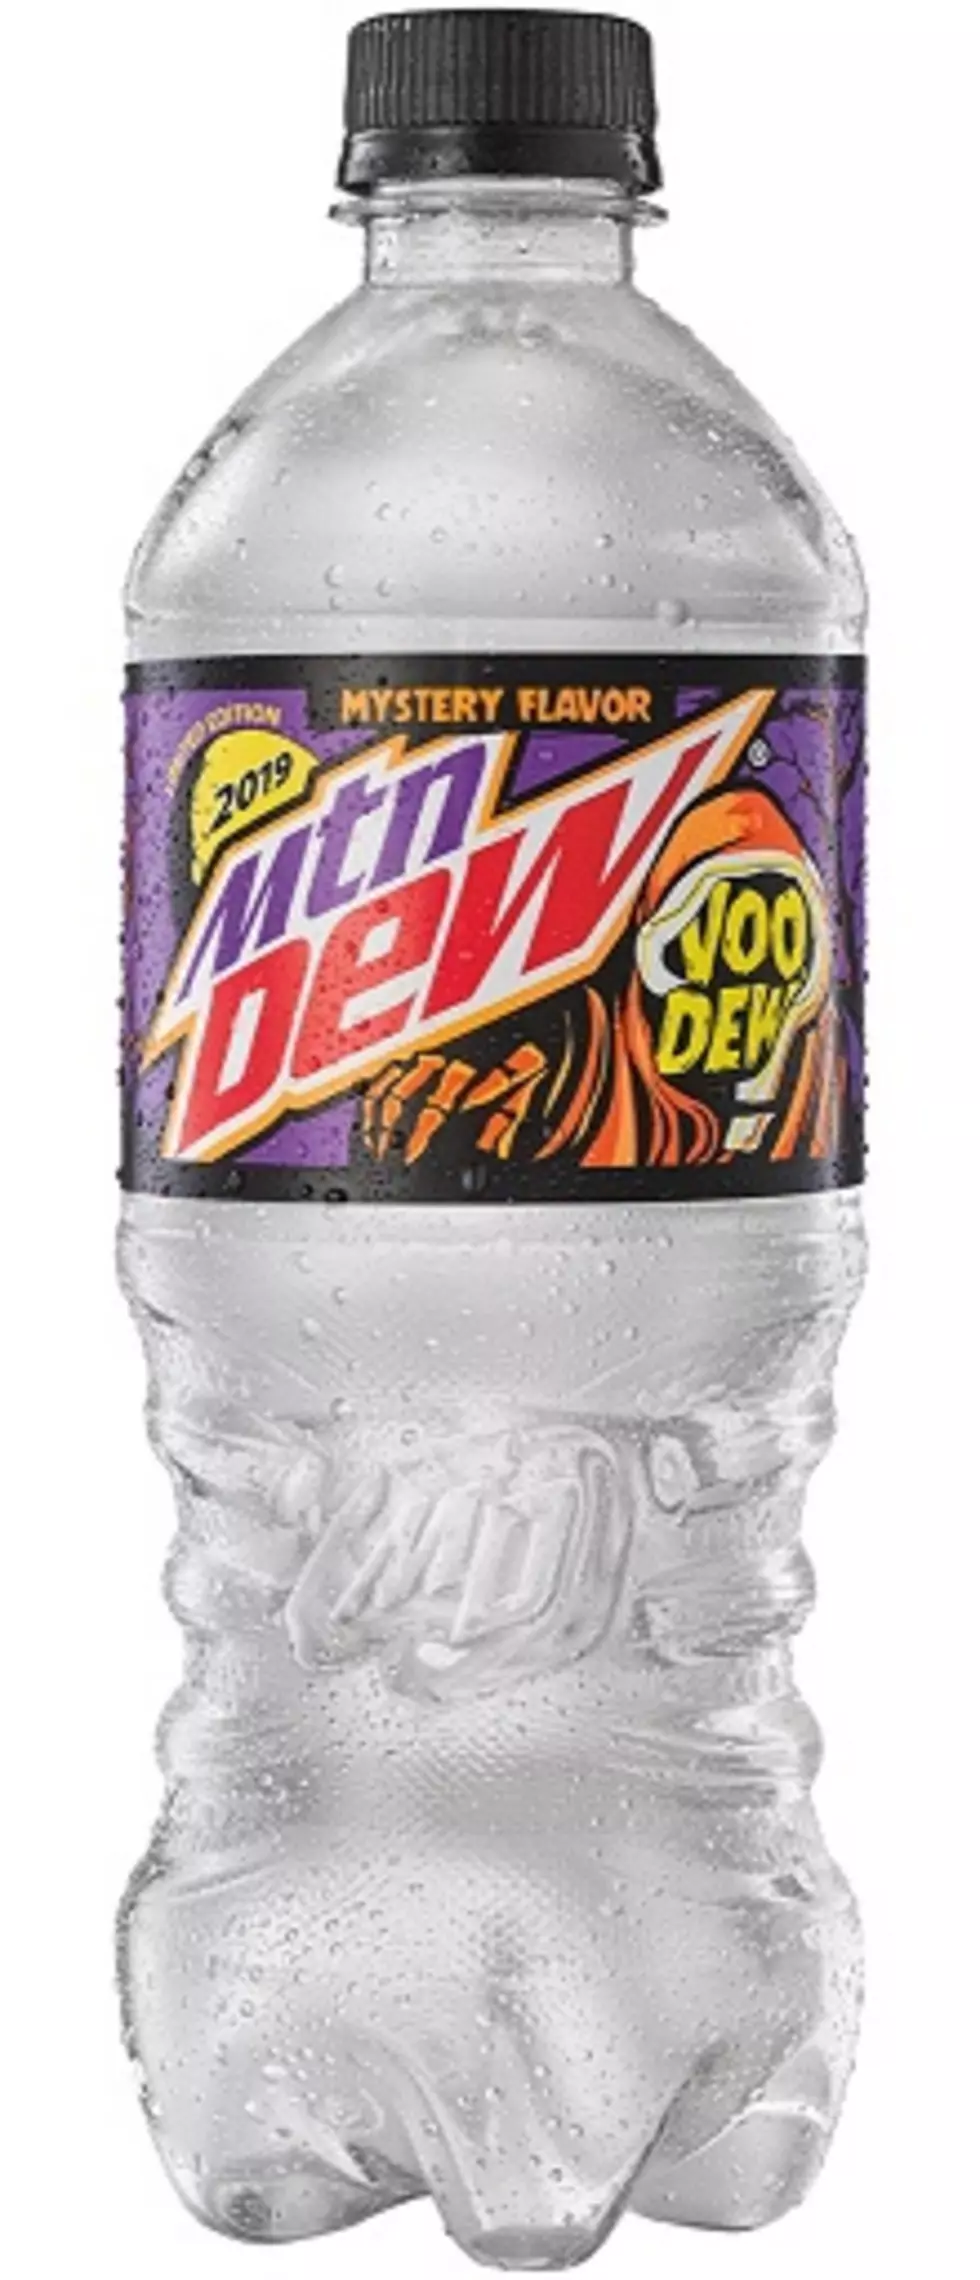 Mountain Dew Mystery Halloween Flavor